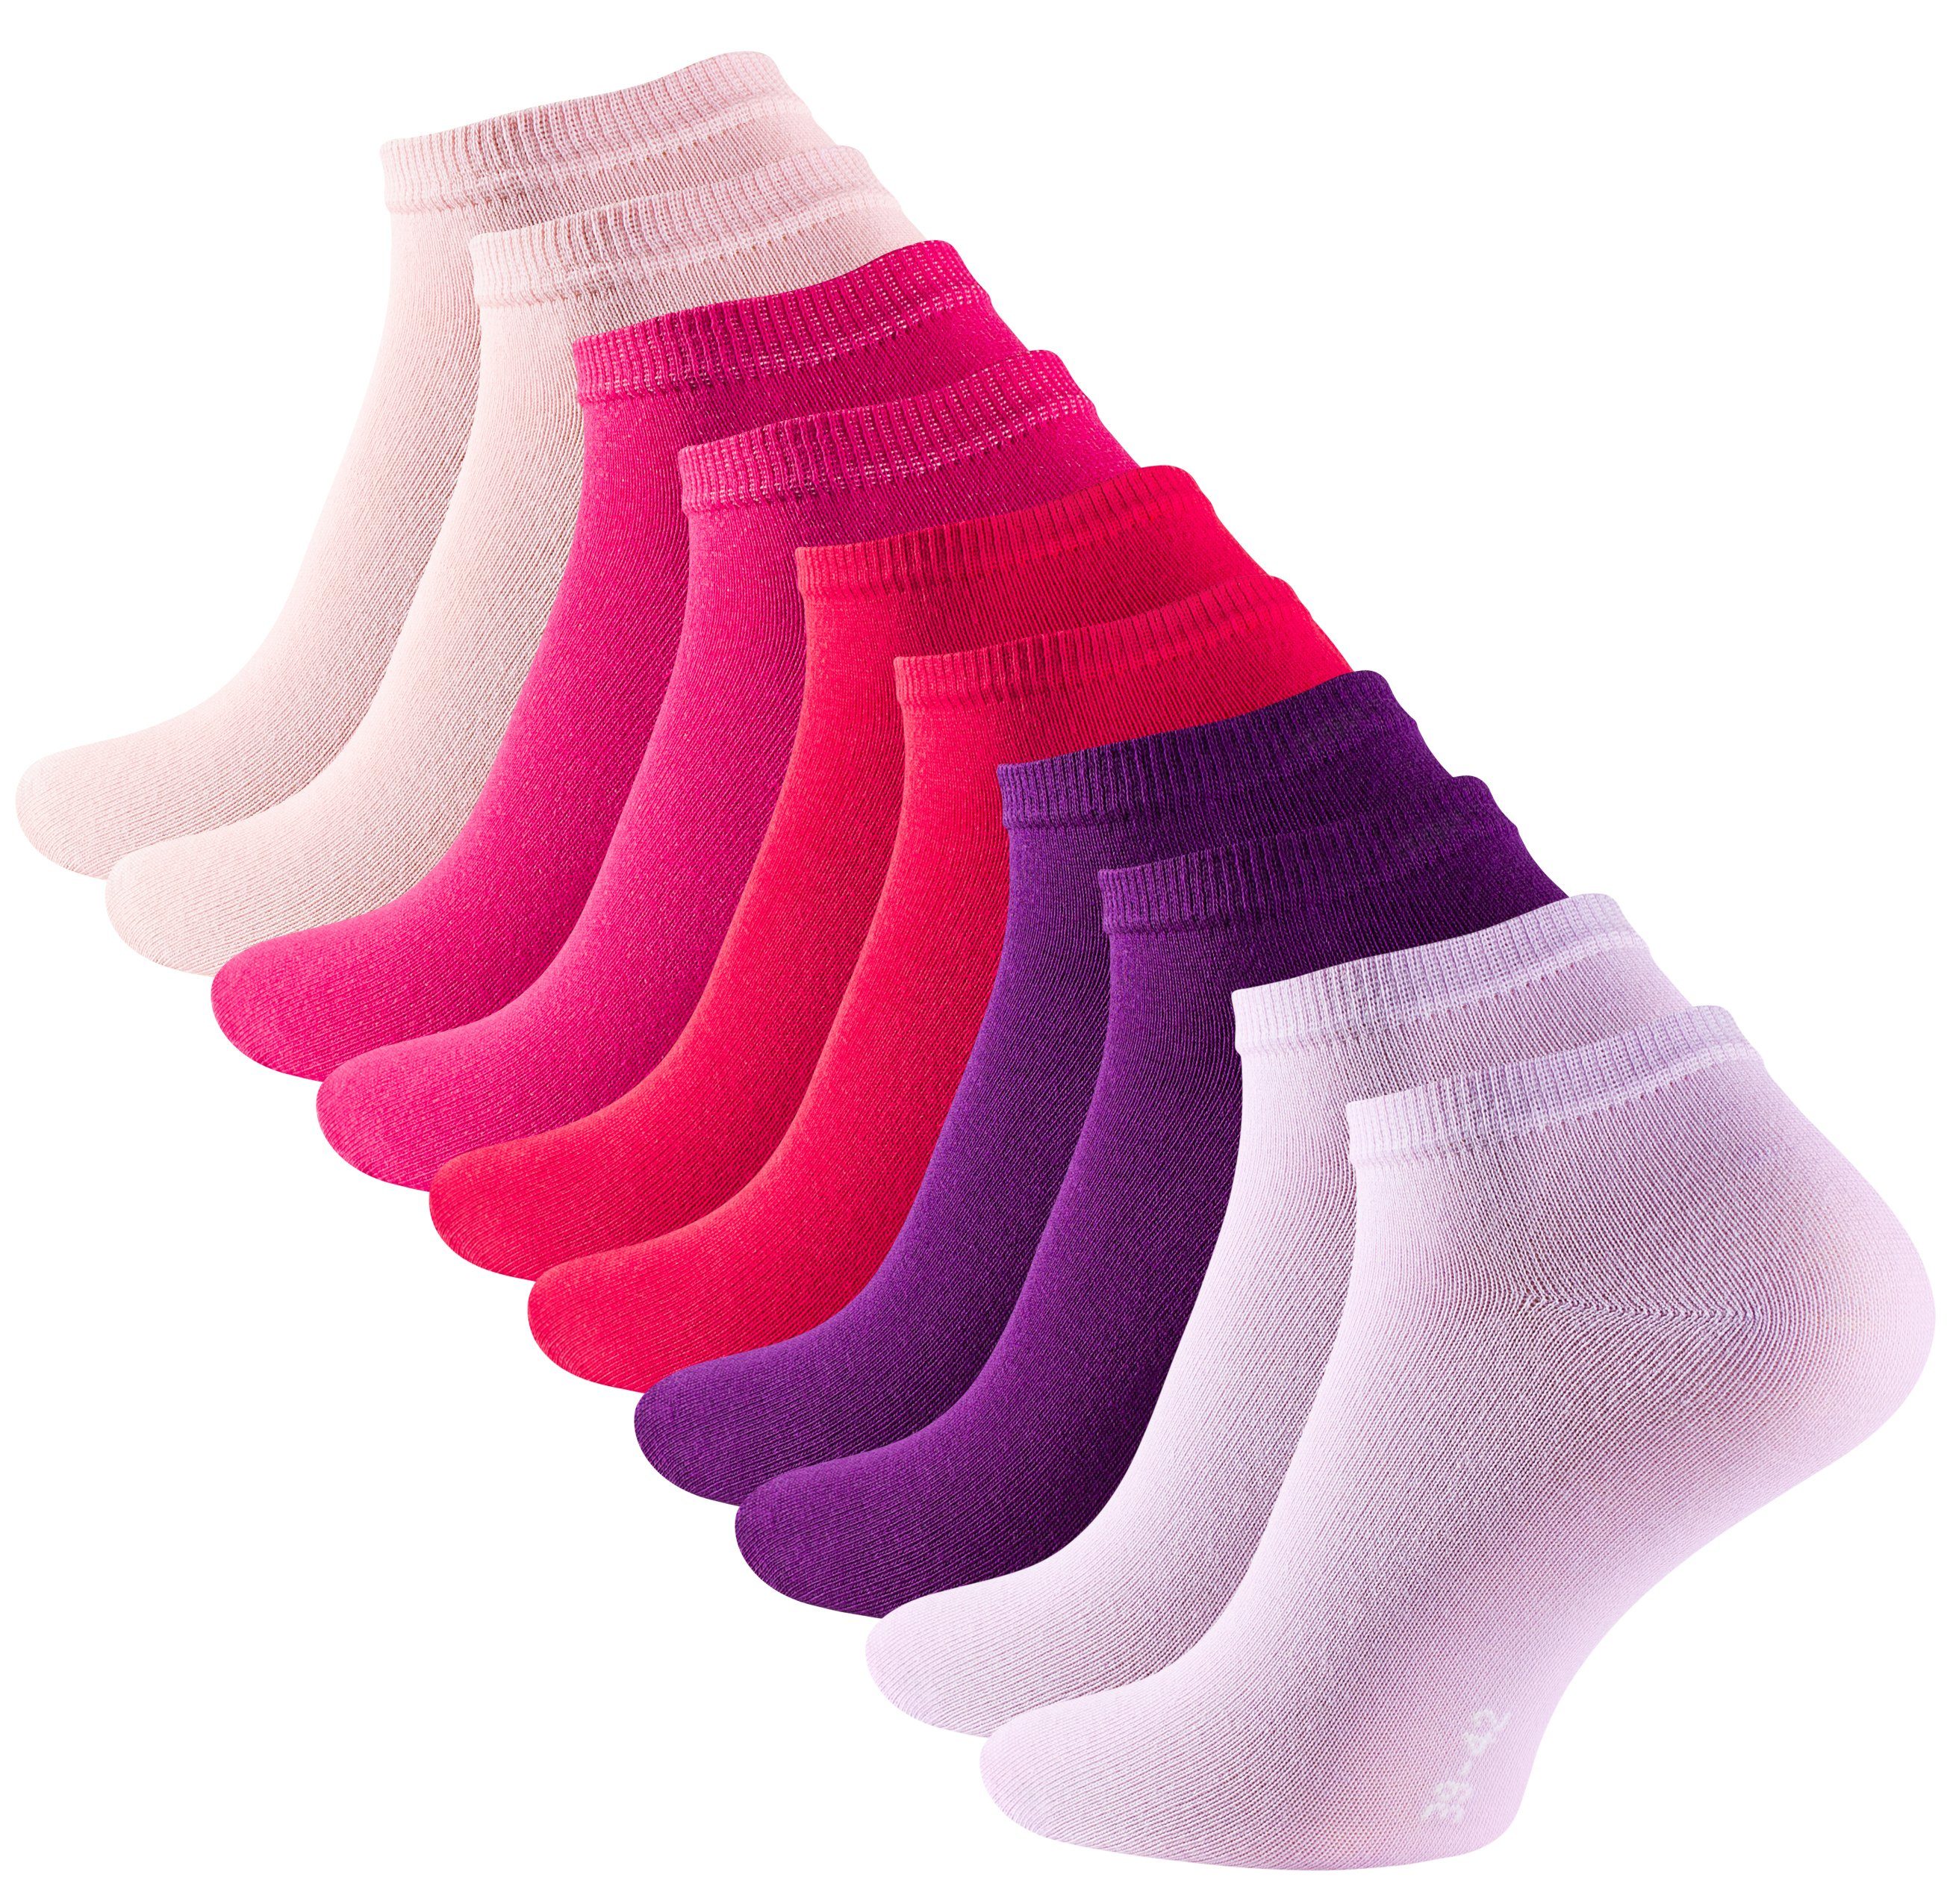 Cotton Prime® Sneakersocken (10-Paar) in angenehmer Baumwollqualität Berry Colours